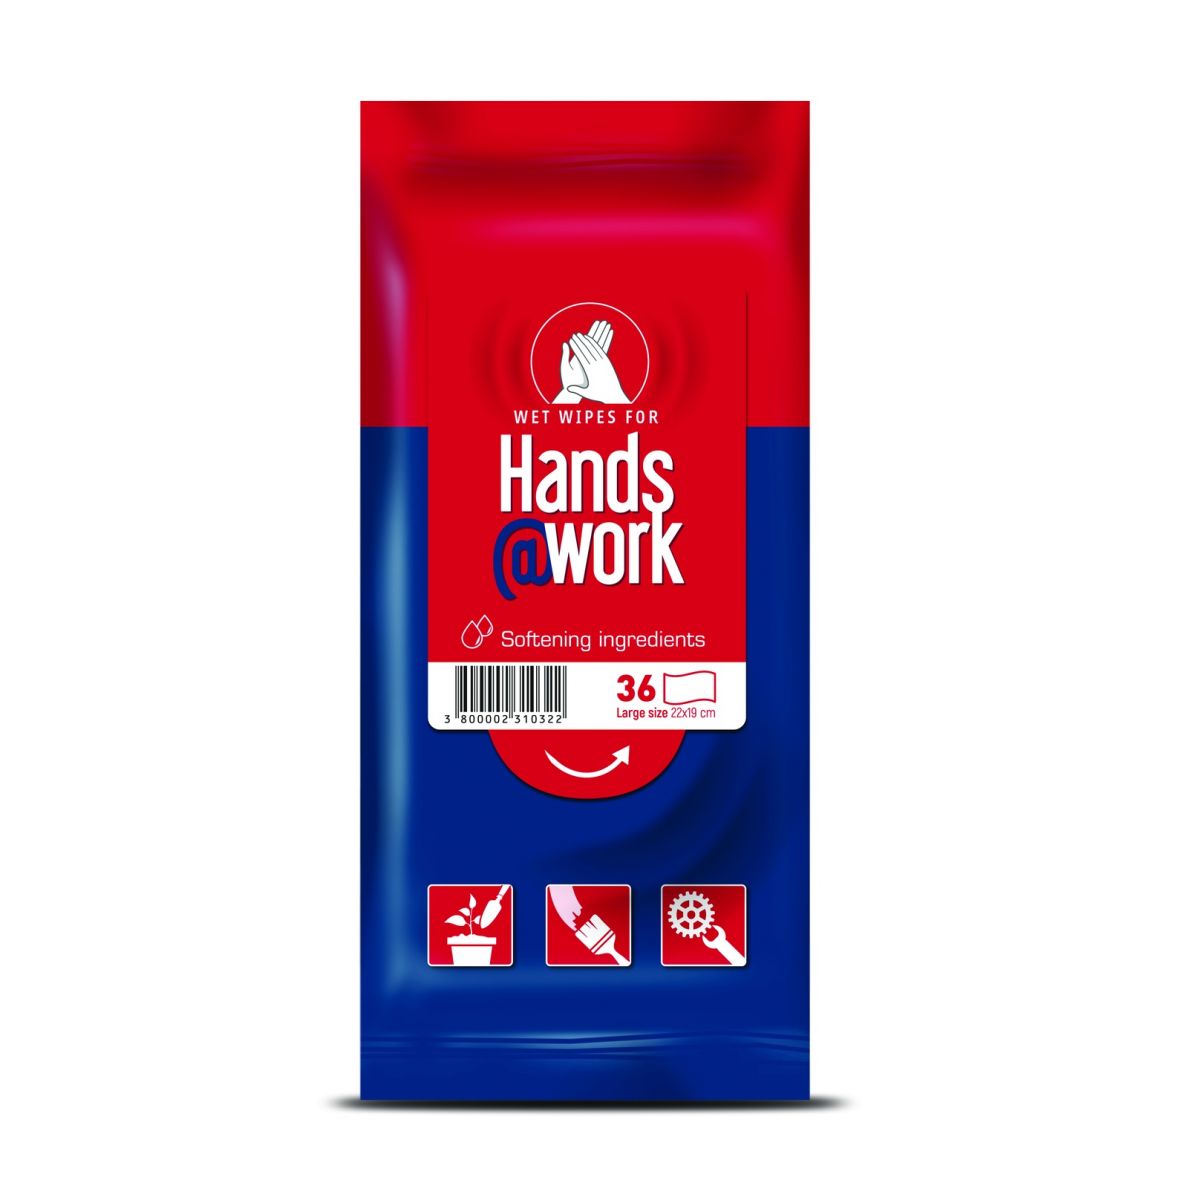 Hands work салфетки для очищения рук от грязи/машин масла/краски/клея N 36